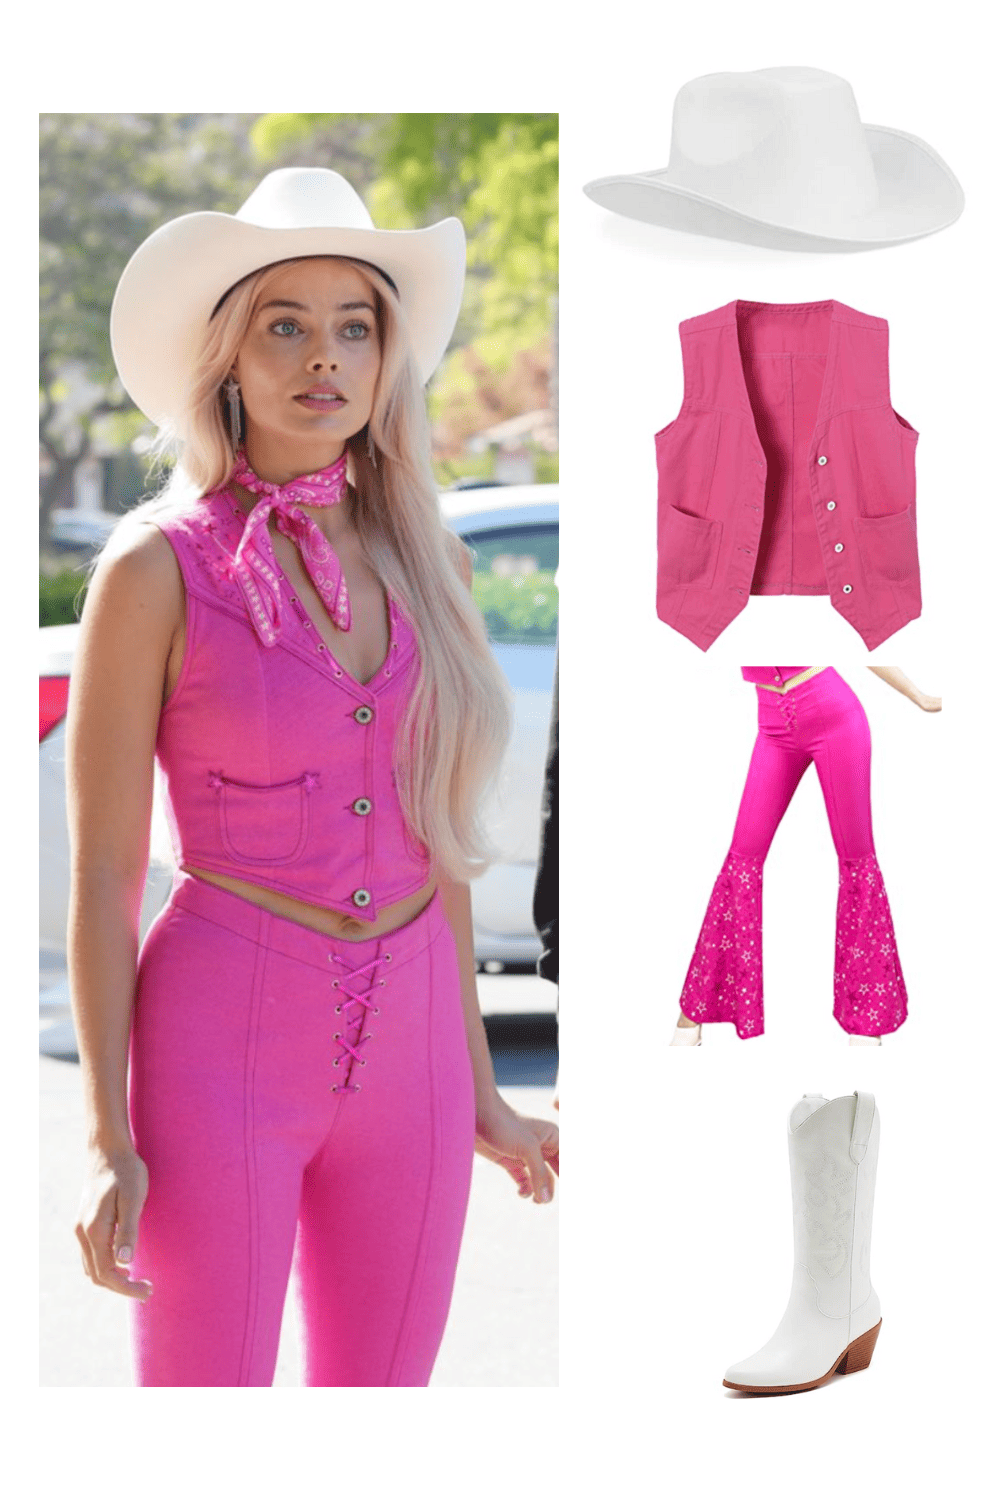 10+ Barbie Halloween Costume Ideas To Recreate (Movie Inspired)